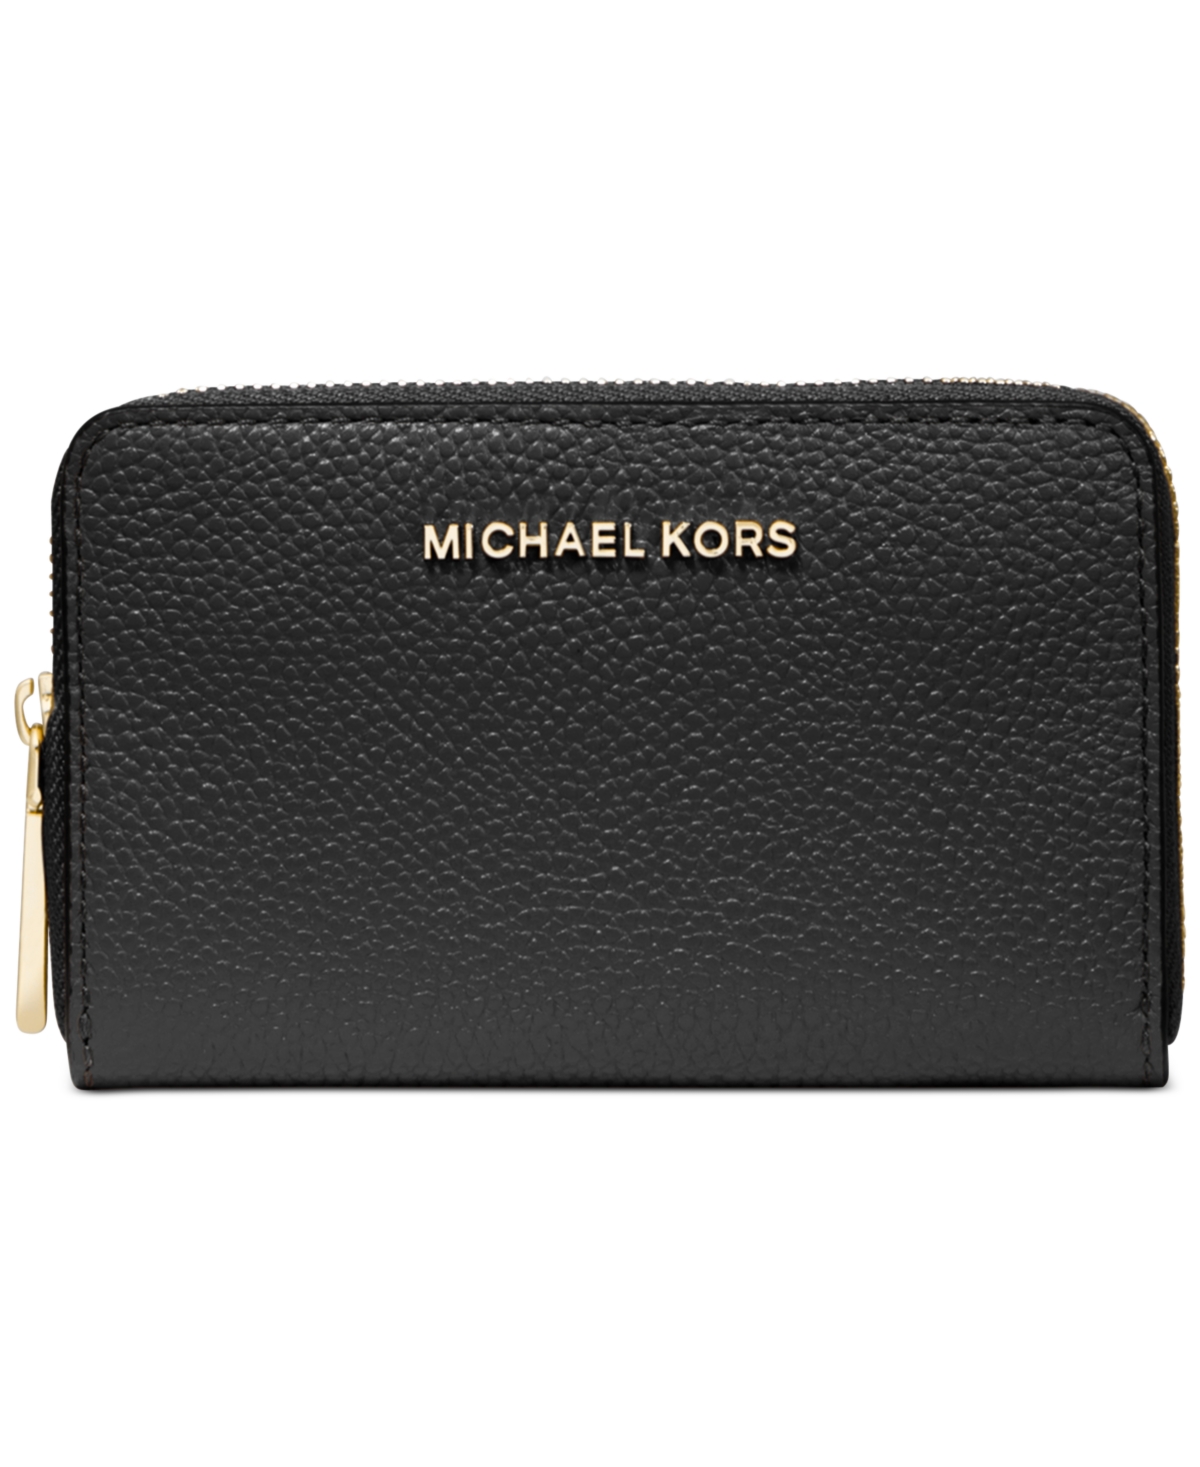 MICHAEL KORS: Michael wallet in leather - Black  Michael Kors wallet  34F9SAFW4L online at